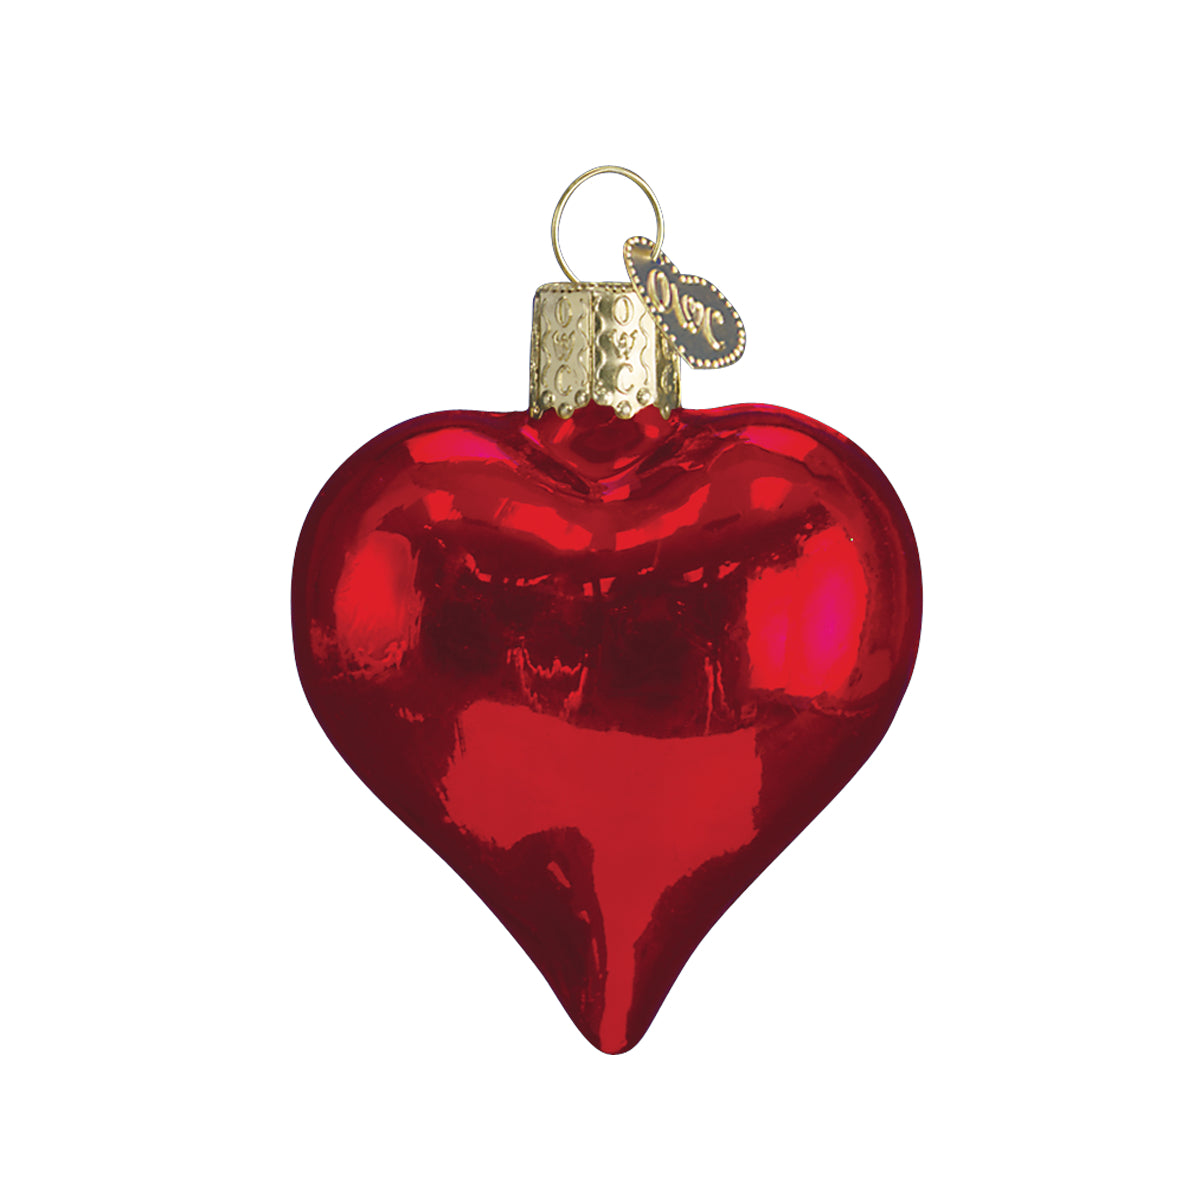 Shiny Red Heart Ornament